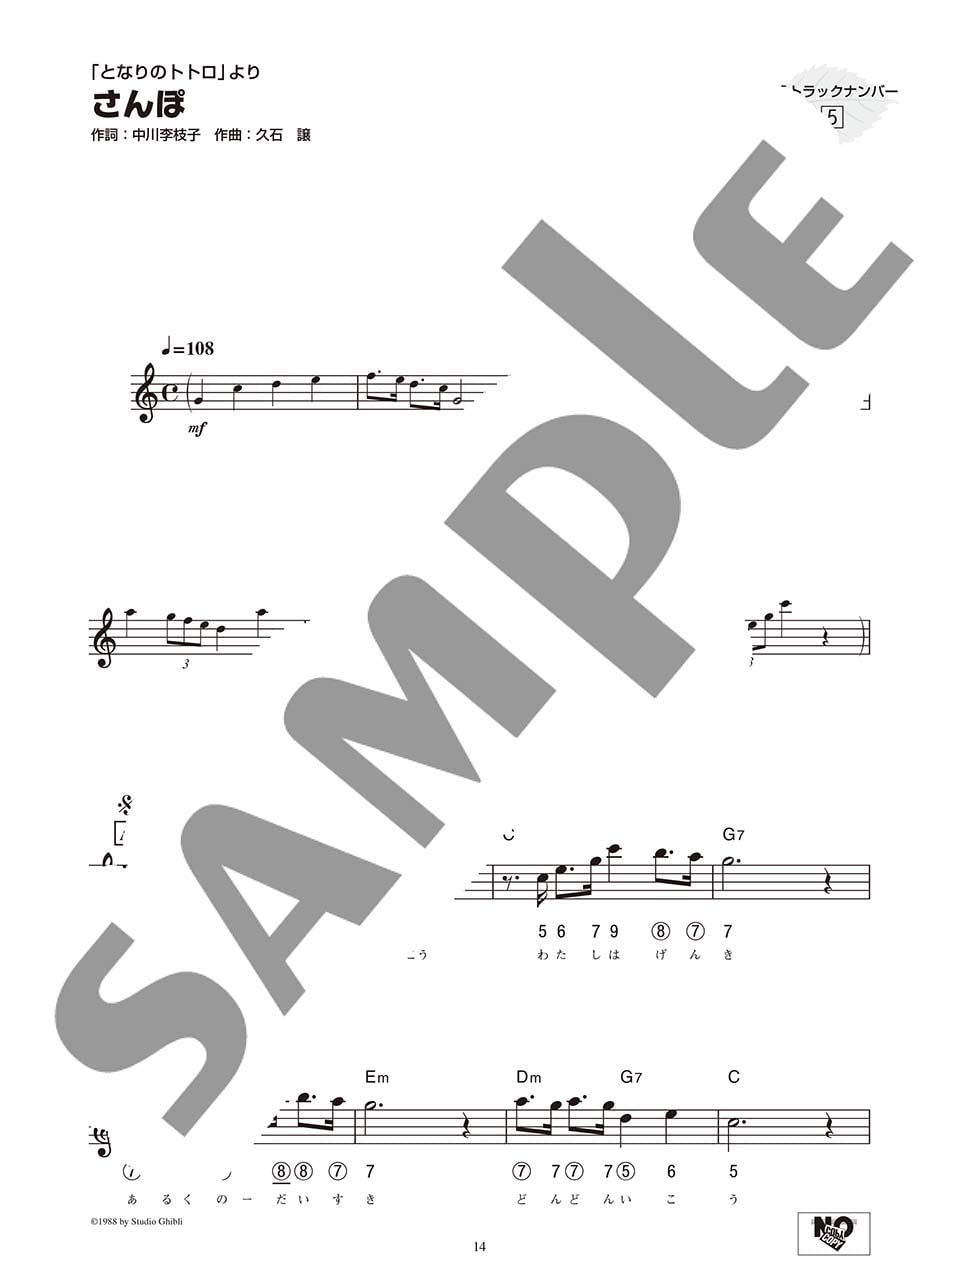 Studio Ghibli Collection for Chromatic harmonica w/CD(Backing Tracks)(Intermediate) Sheet Music Book